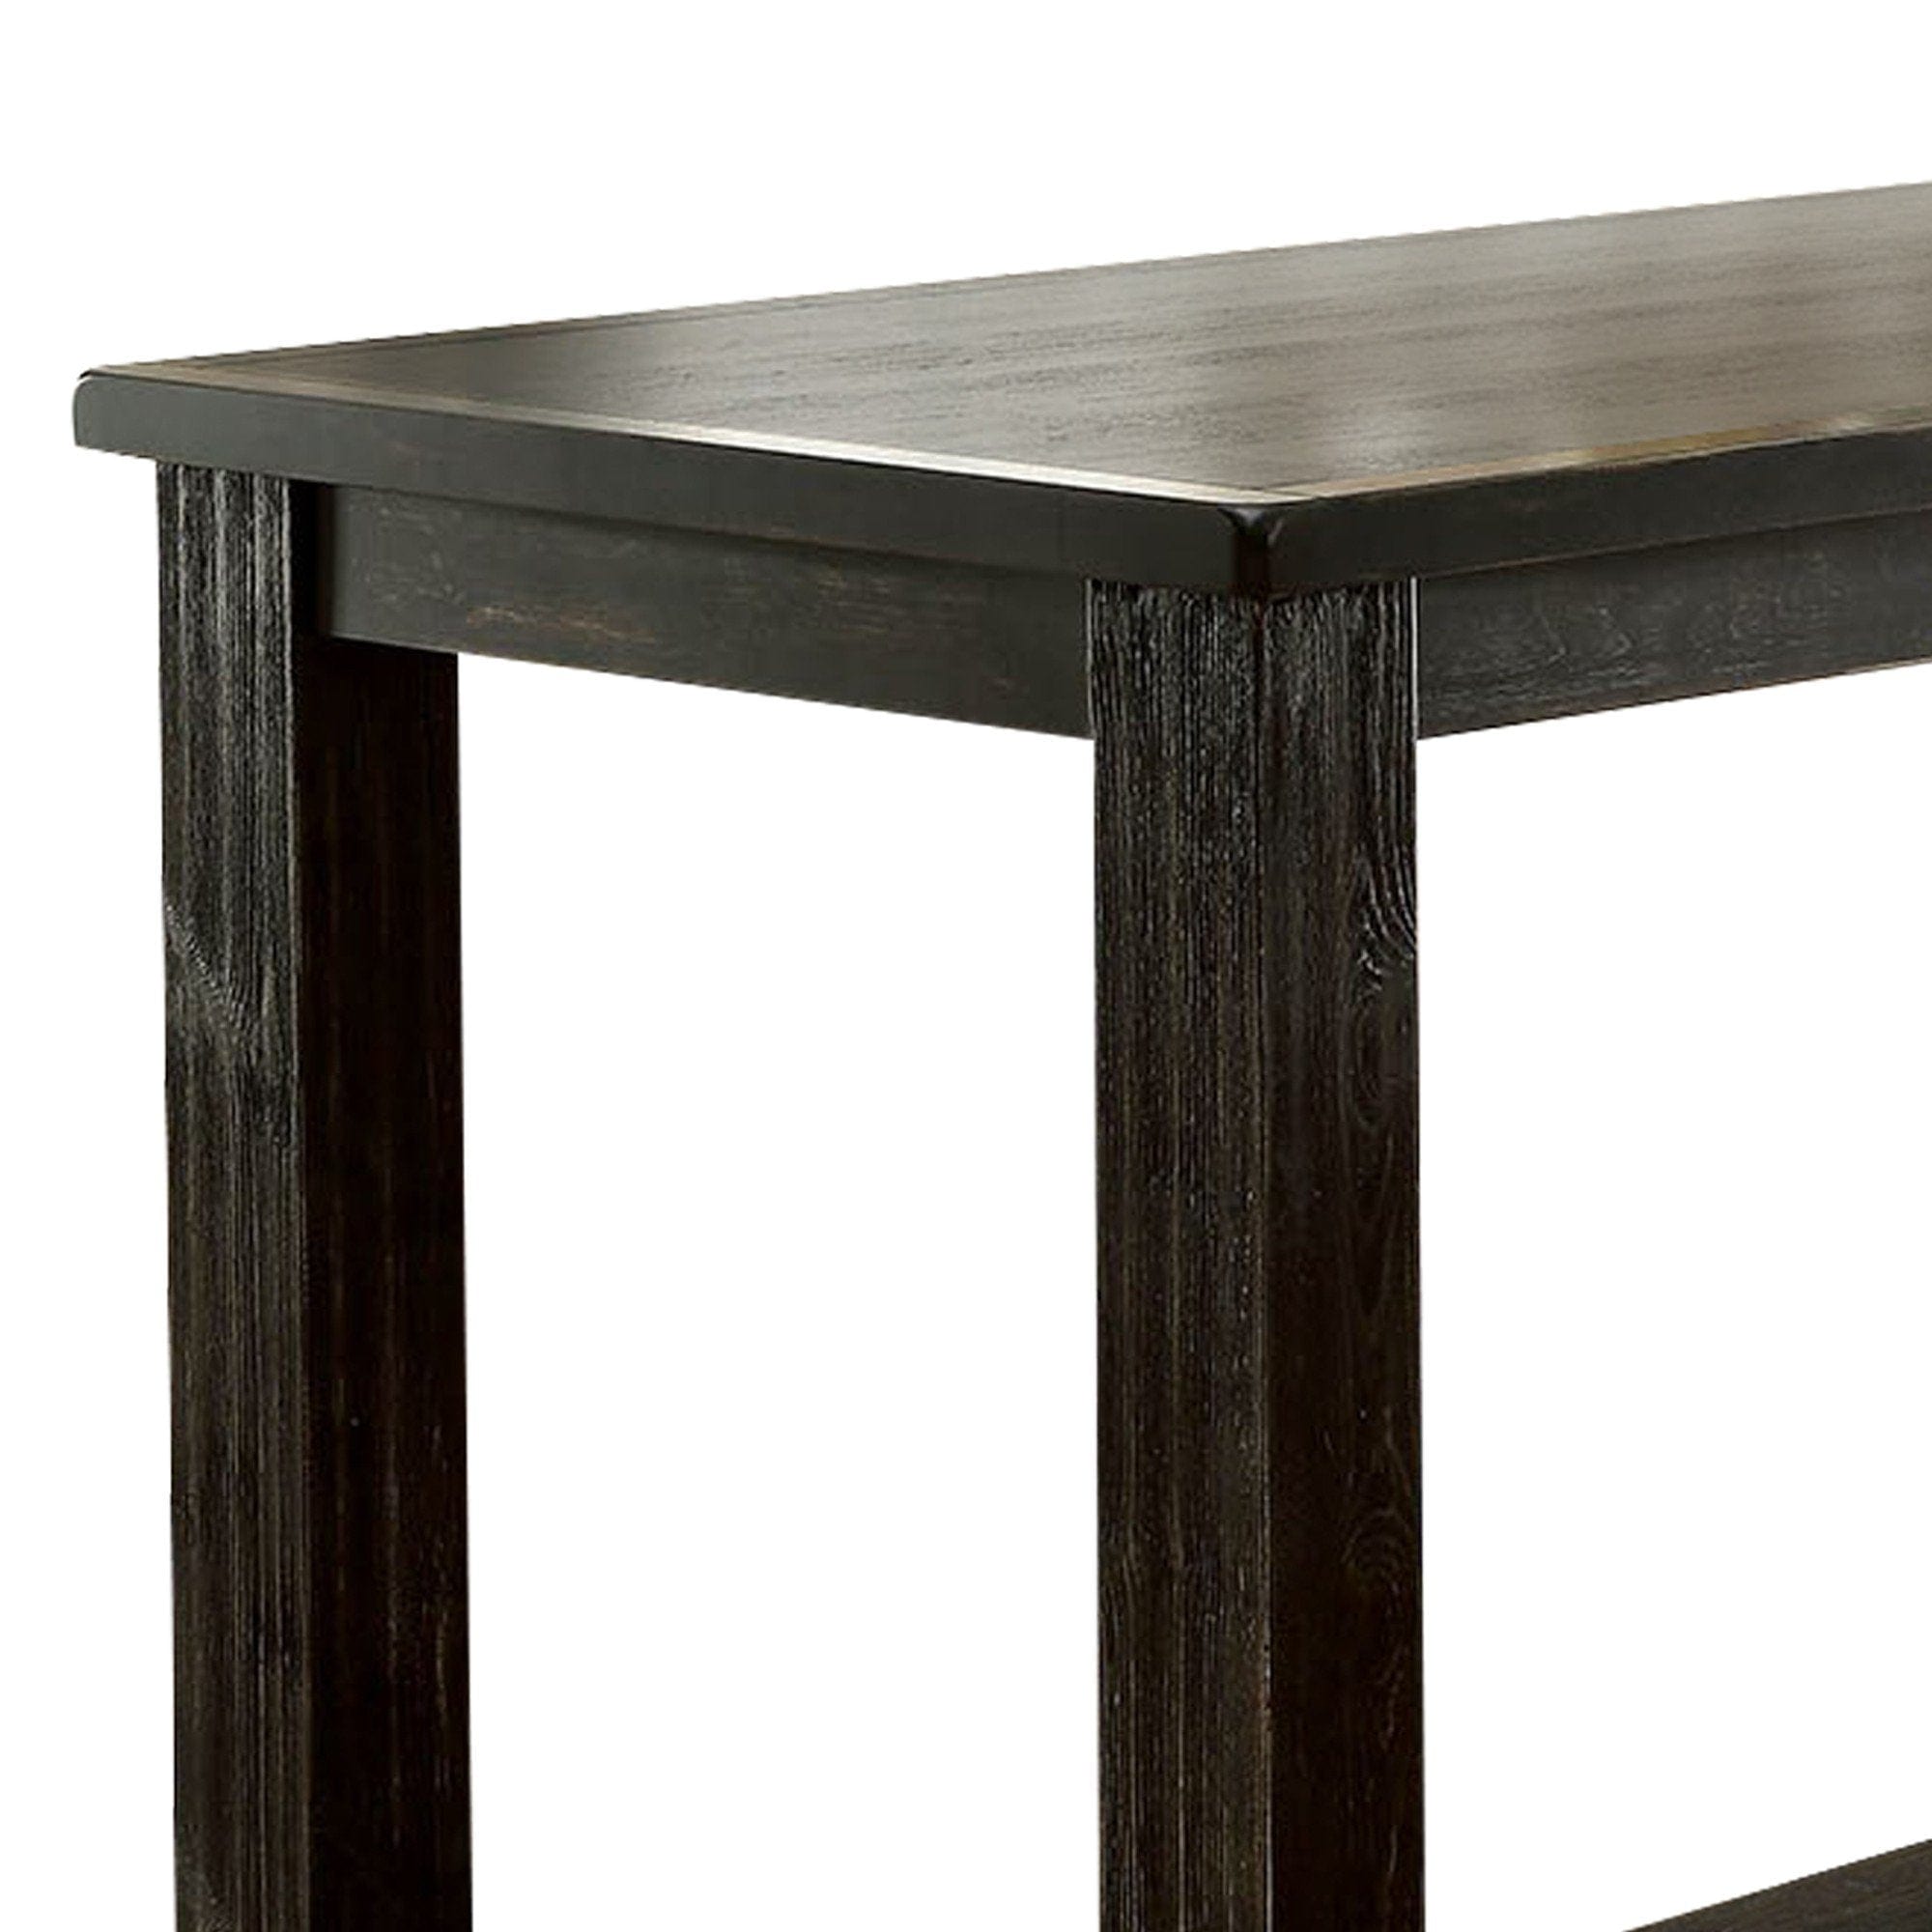 Benzara Benzara 42" Rustic Plank Wooden Bar Table with Block Legs BM230029 Bar Tables BM230029